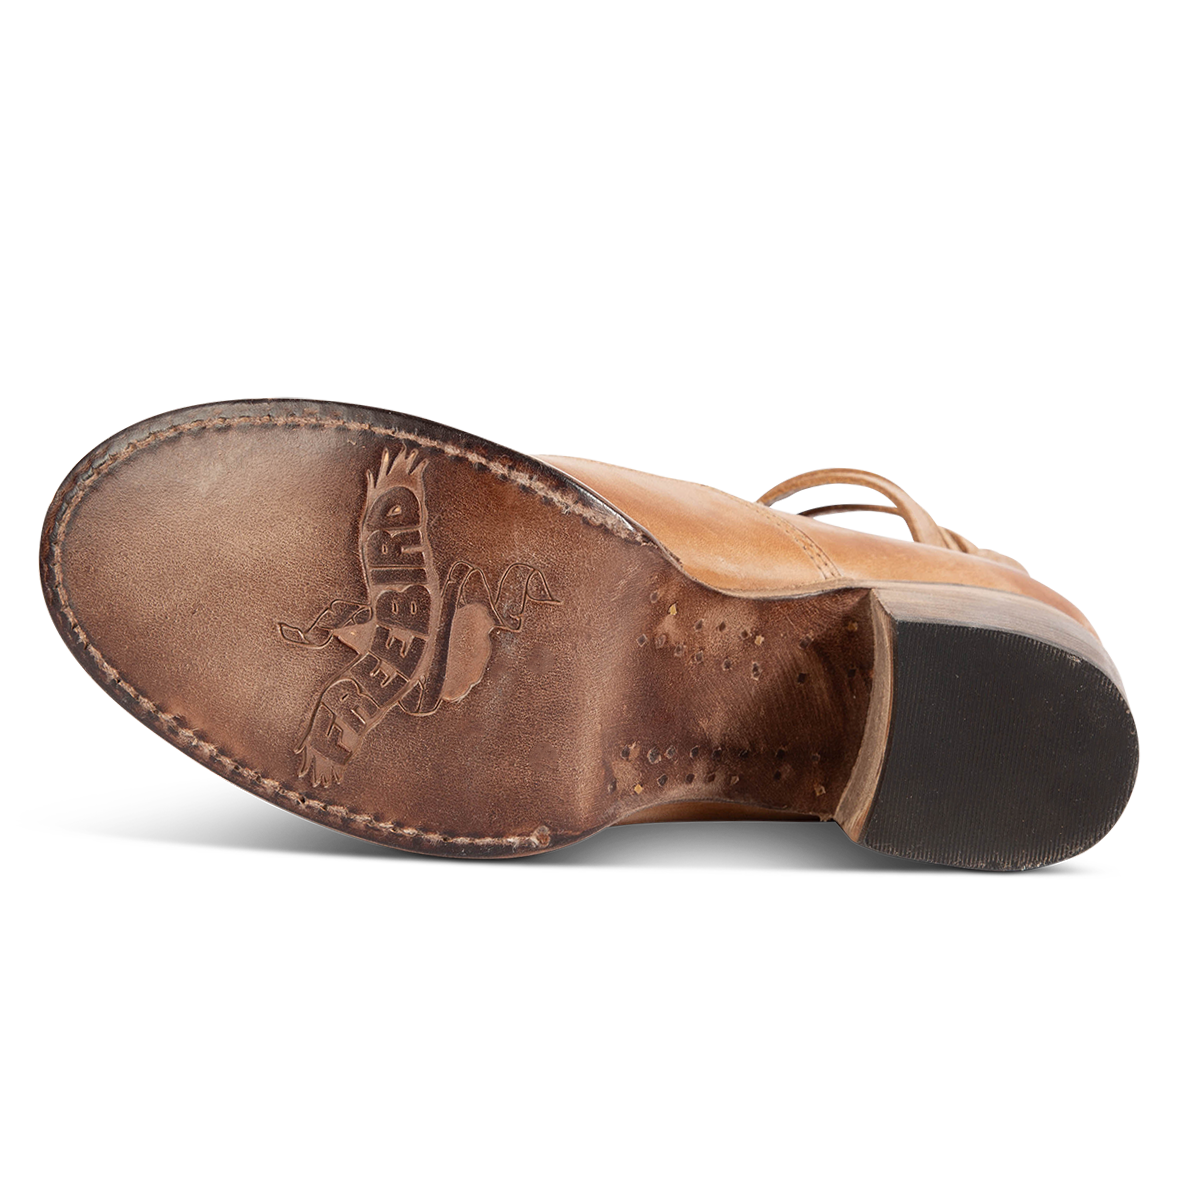 Leather sole imprinted with FREEBIRD on women’s Randi tan shoe